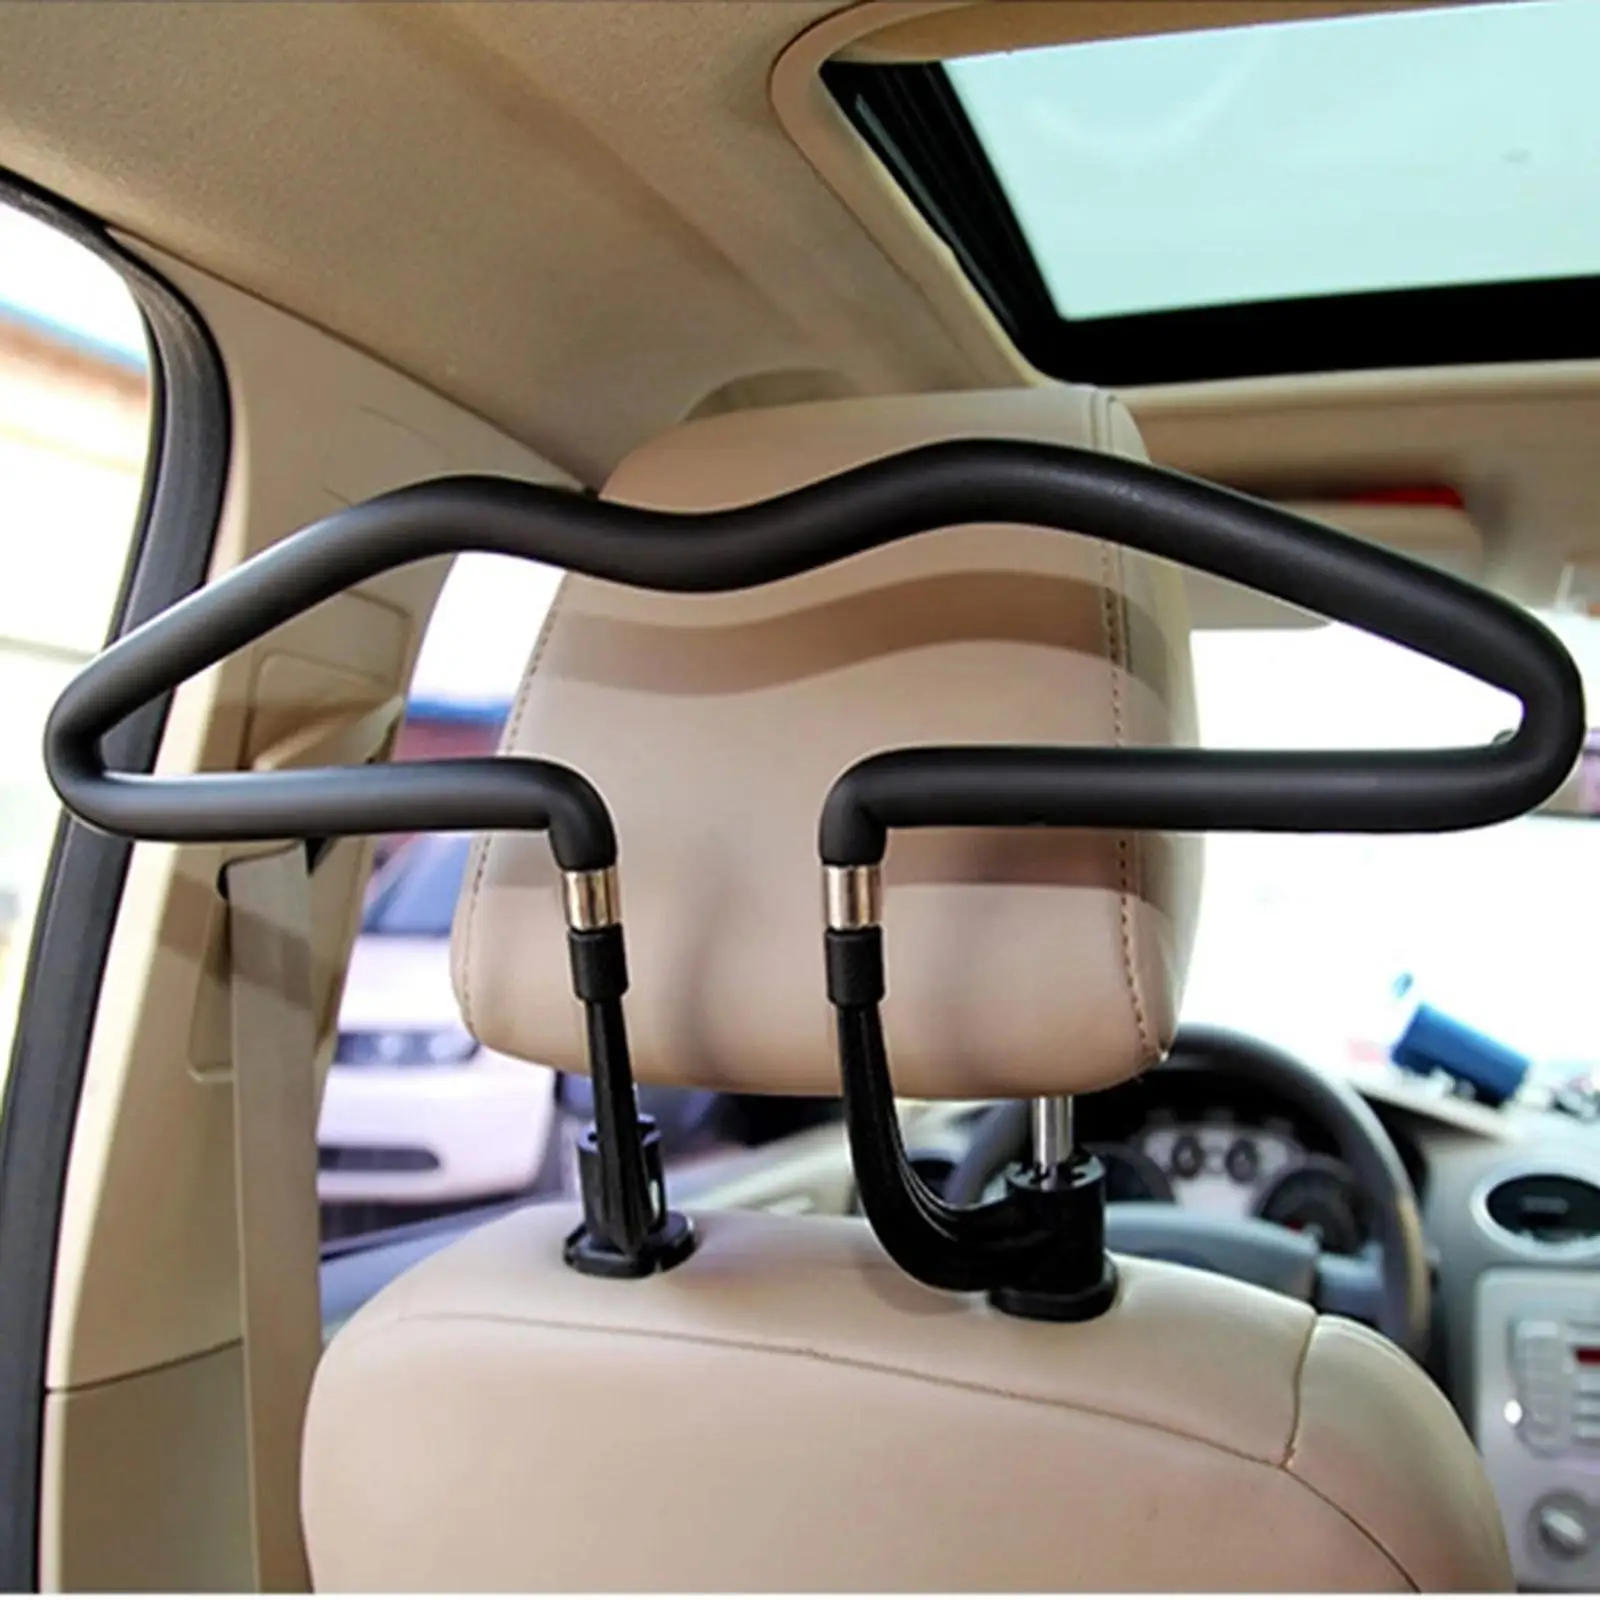 Portable Car Headrest Coat Hanger Easy to Install Space Saving Jacket Holder Coat Hanger Car Hanger Fit for Auto Vehicle Car